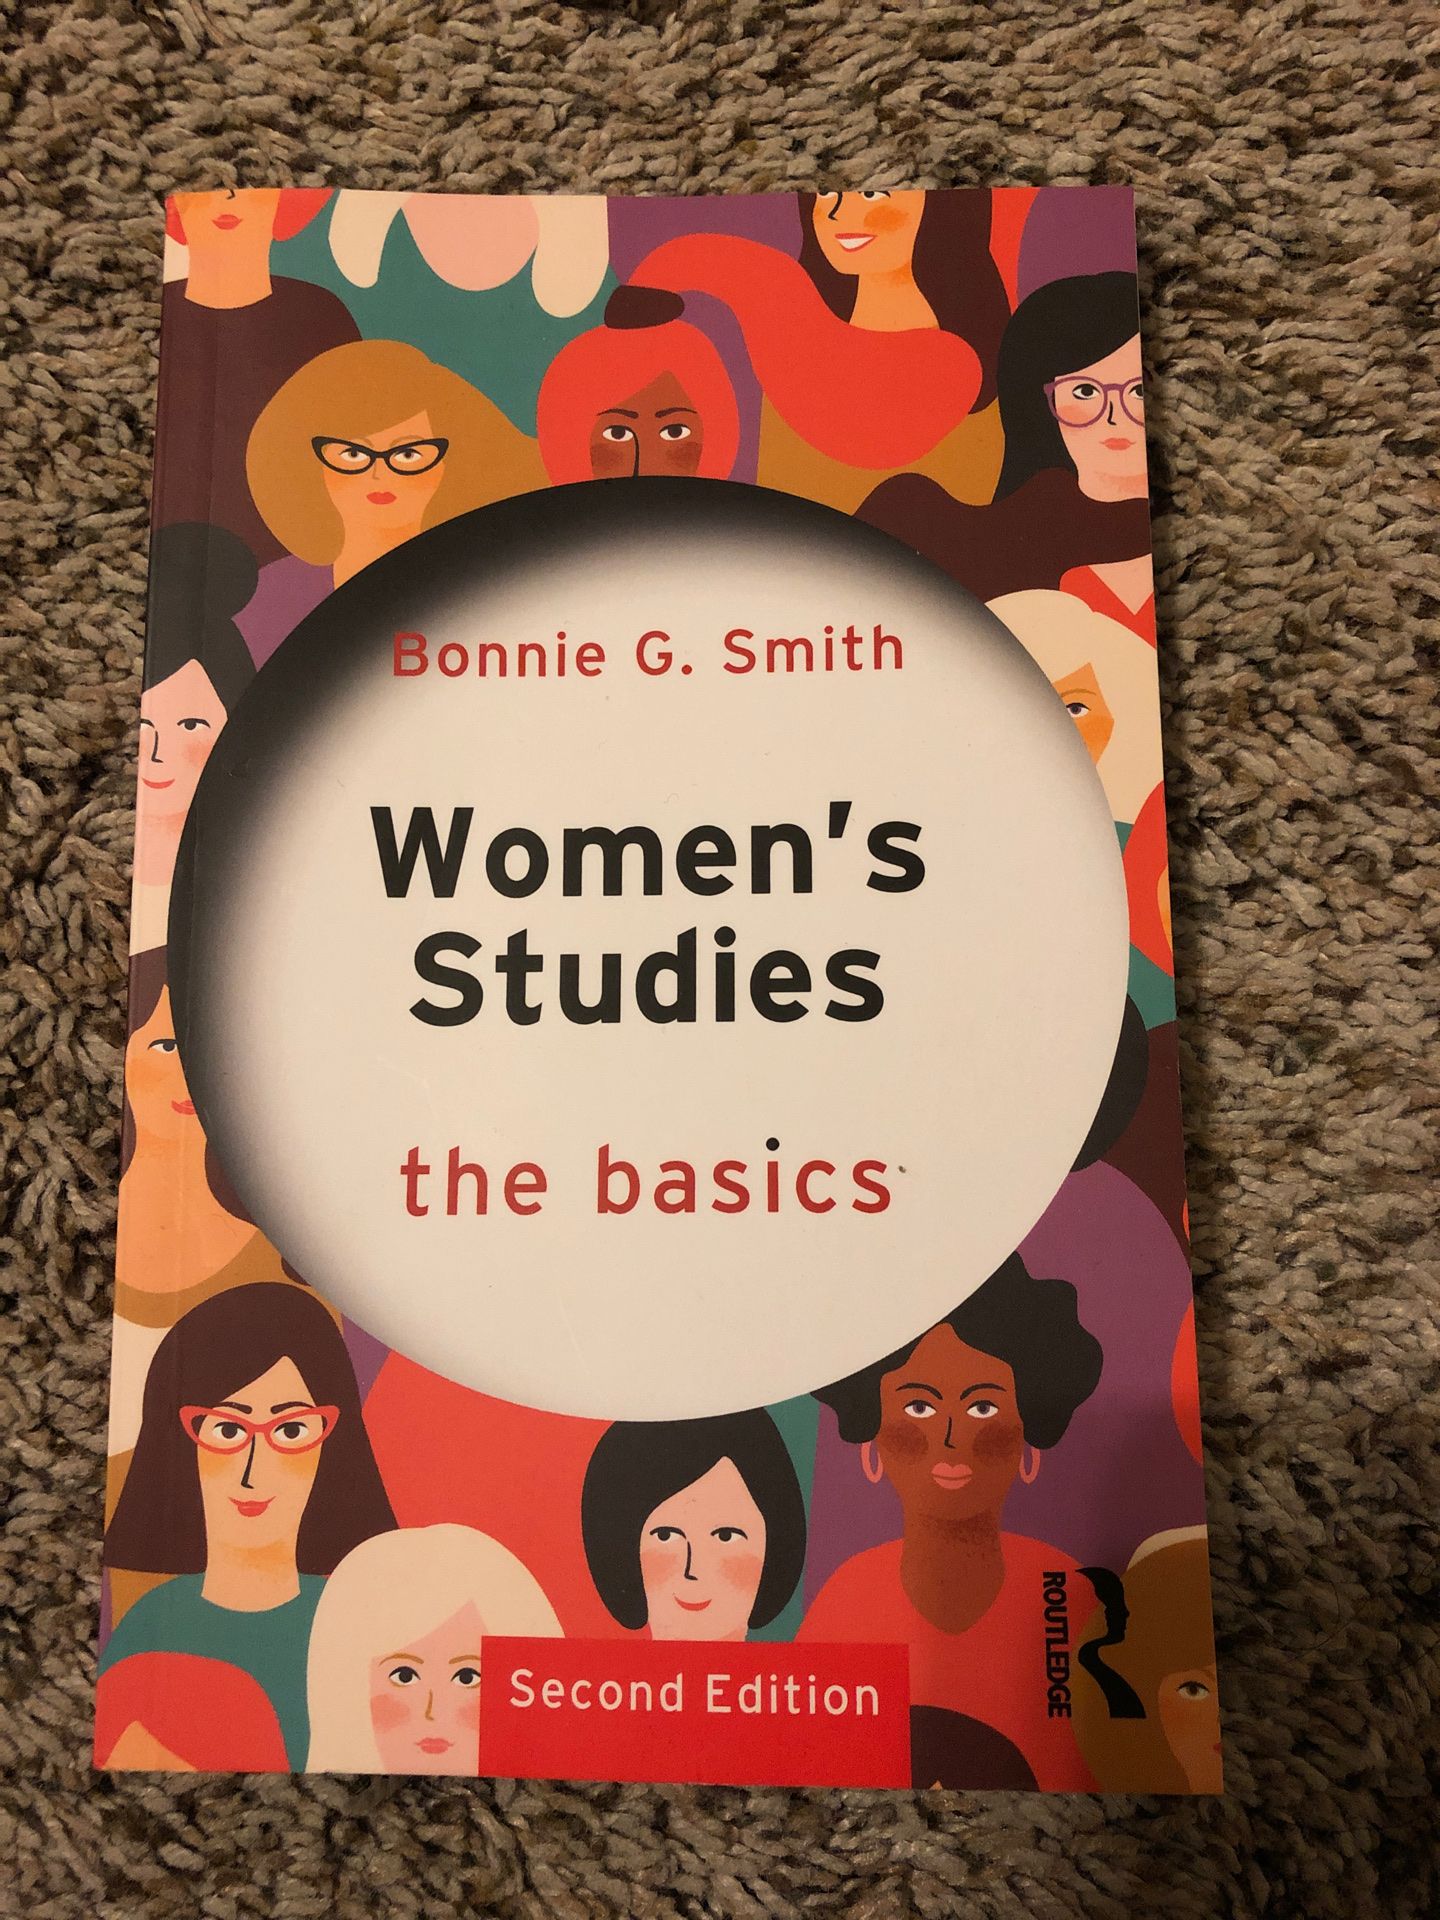 Women's studies second edition